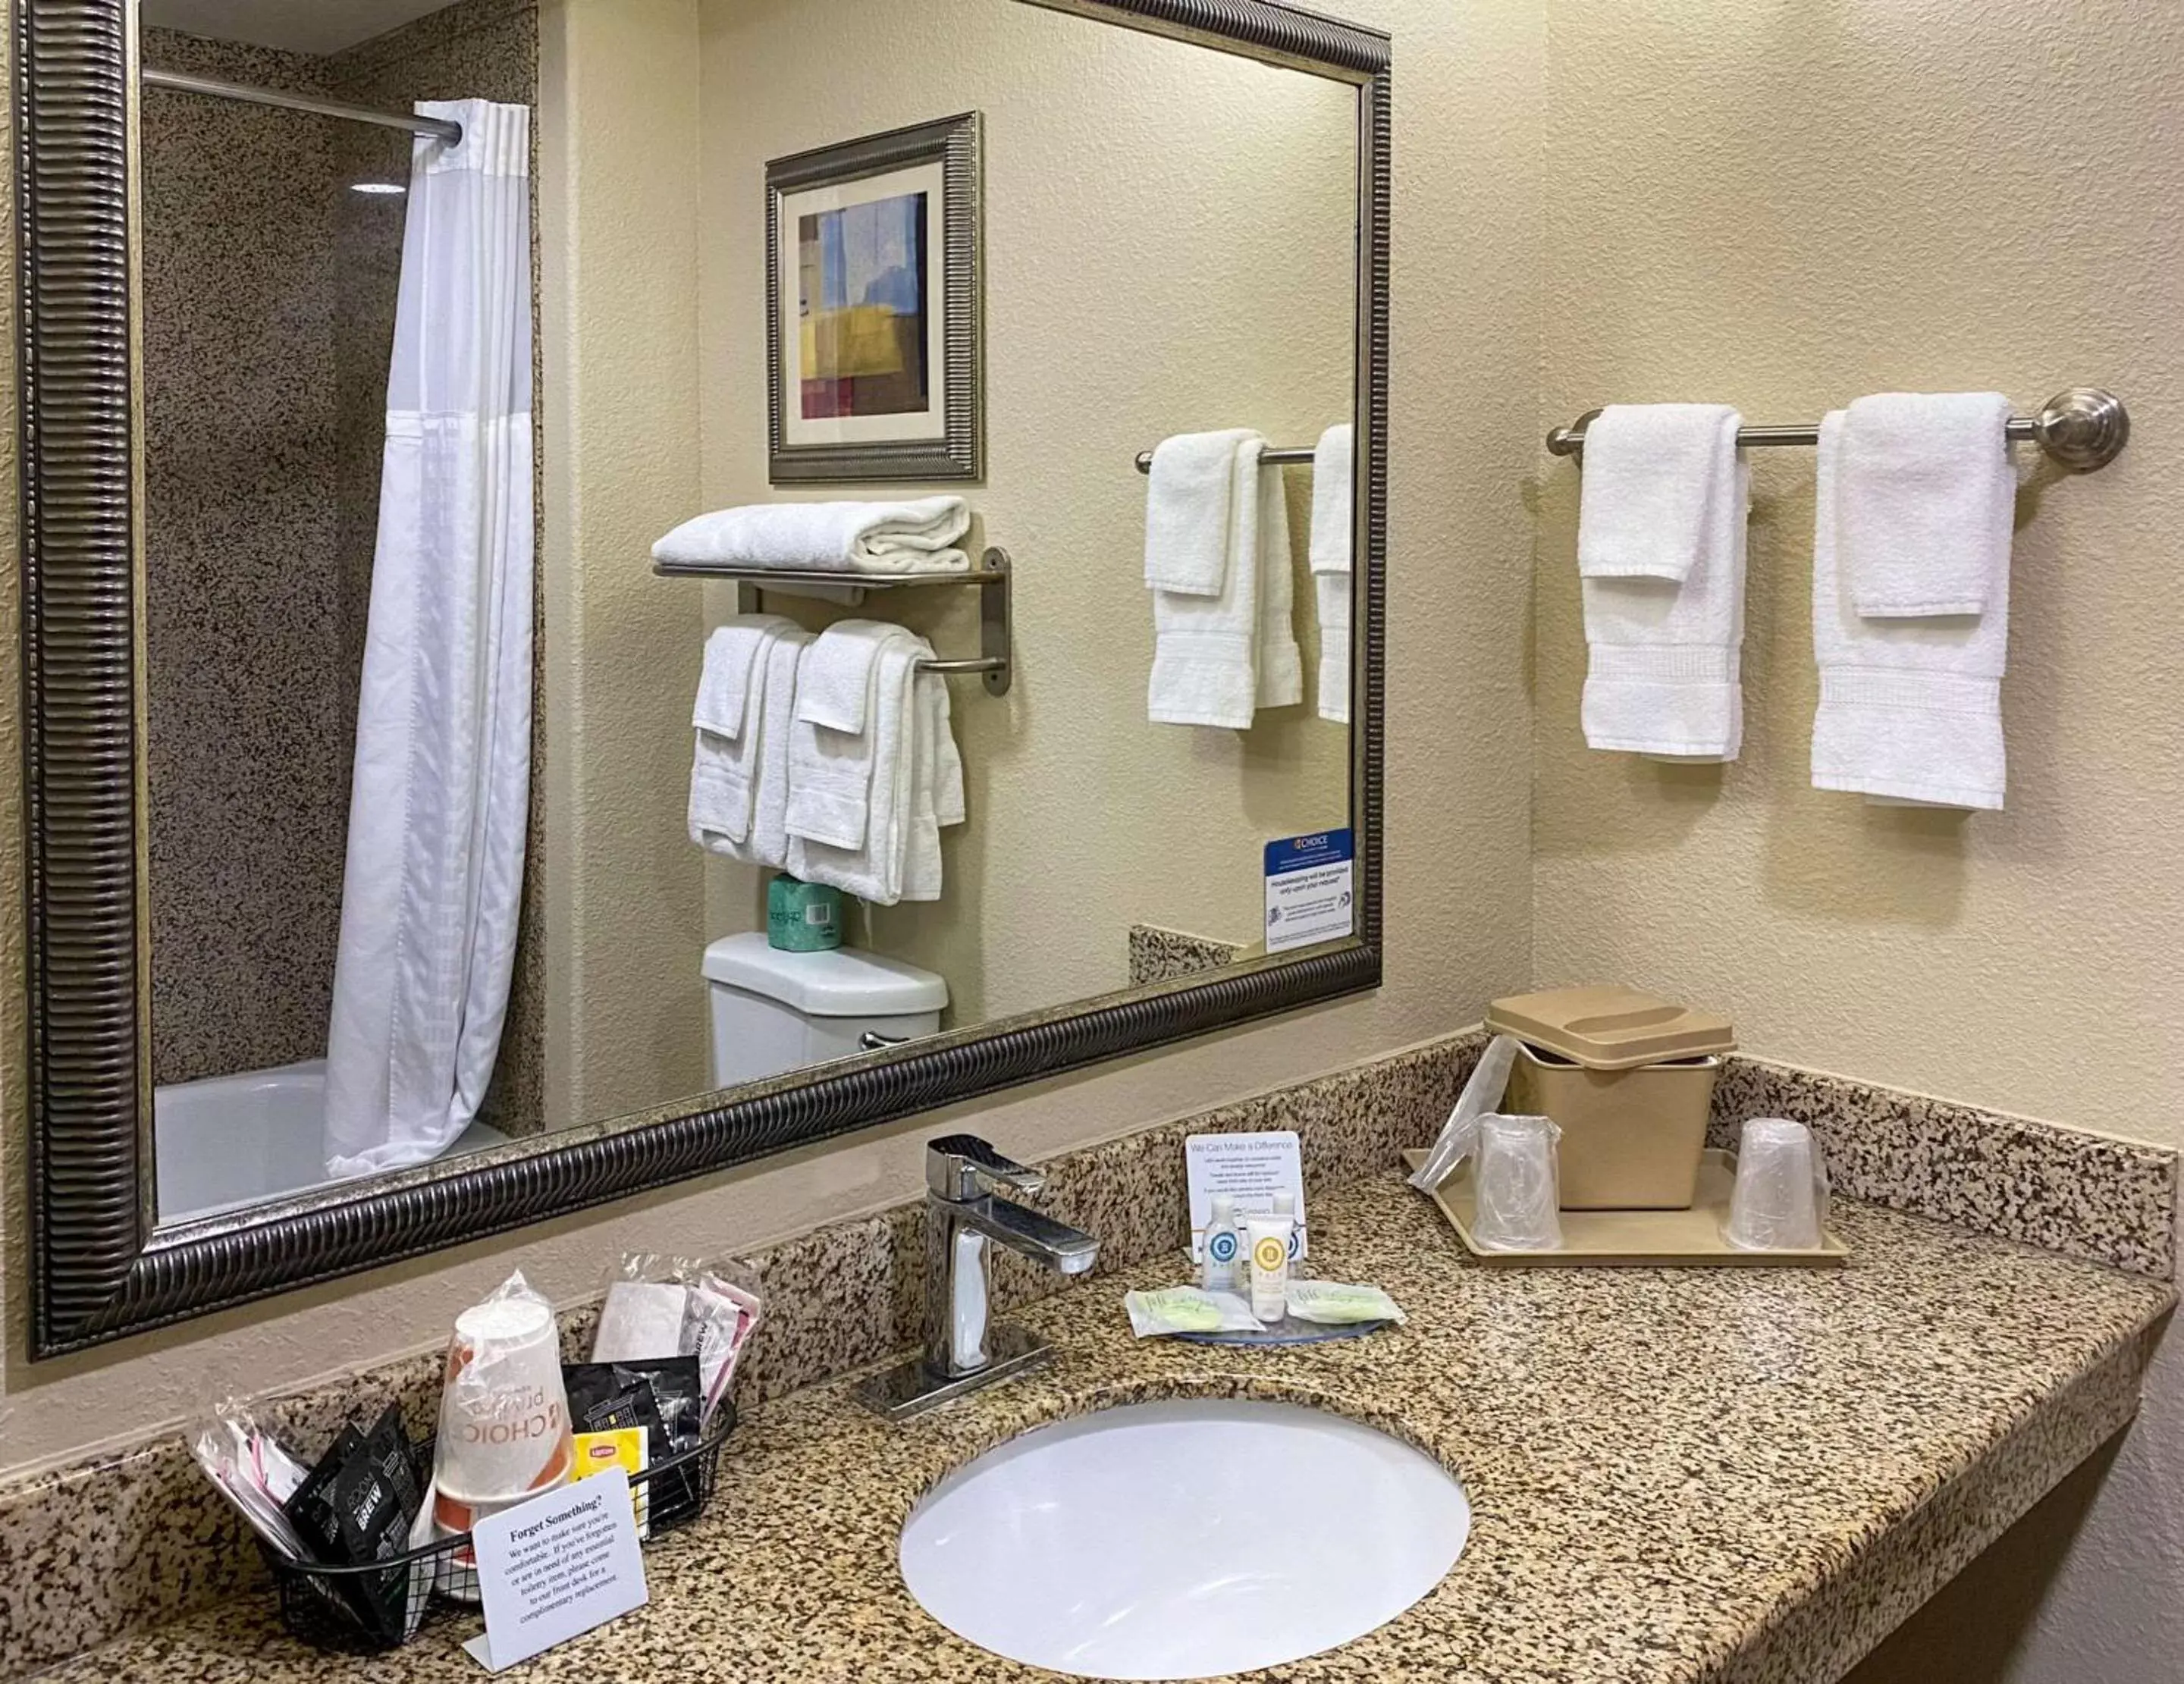 Bathroom in Comfort Suites by Choice Hotels, Kingsland, I-95, Kings Bay Naval Base